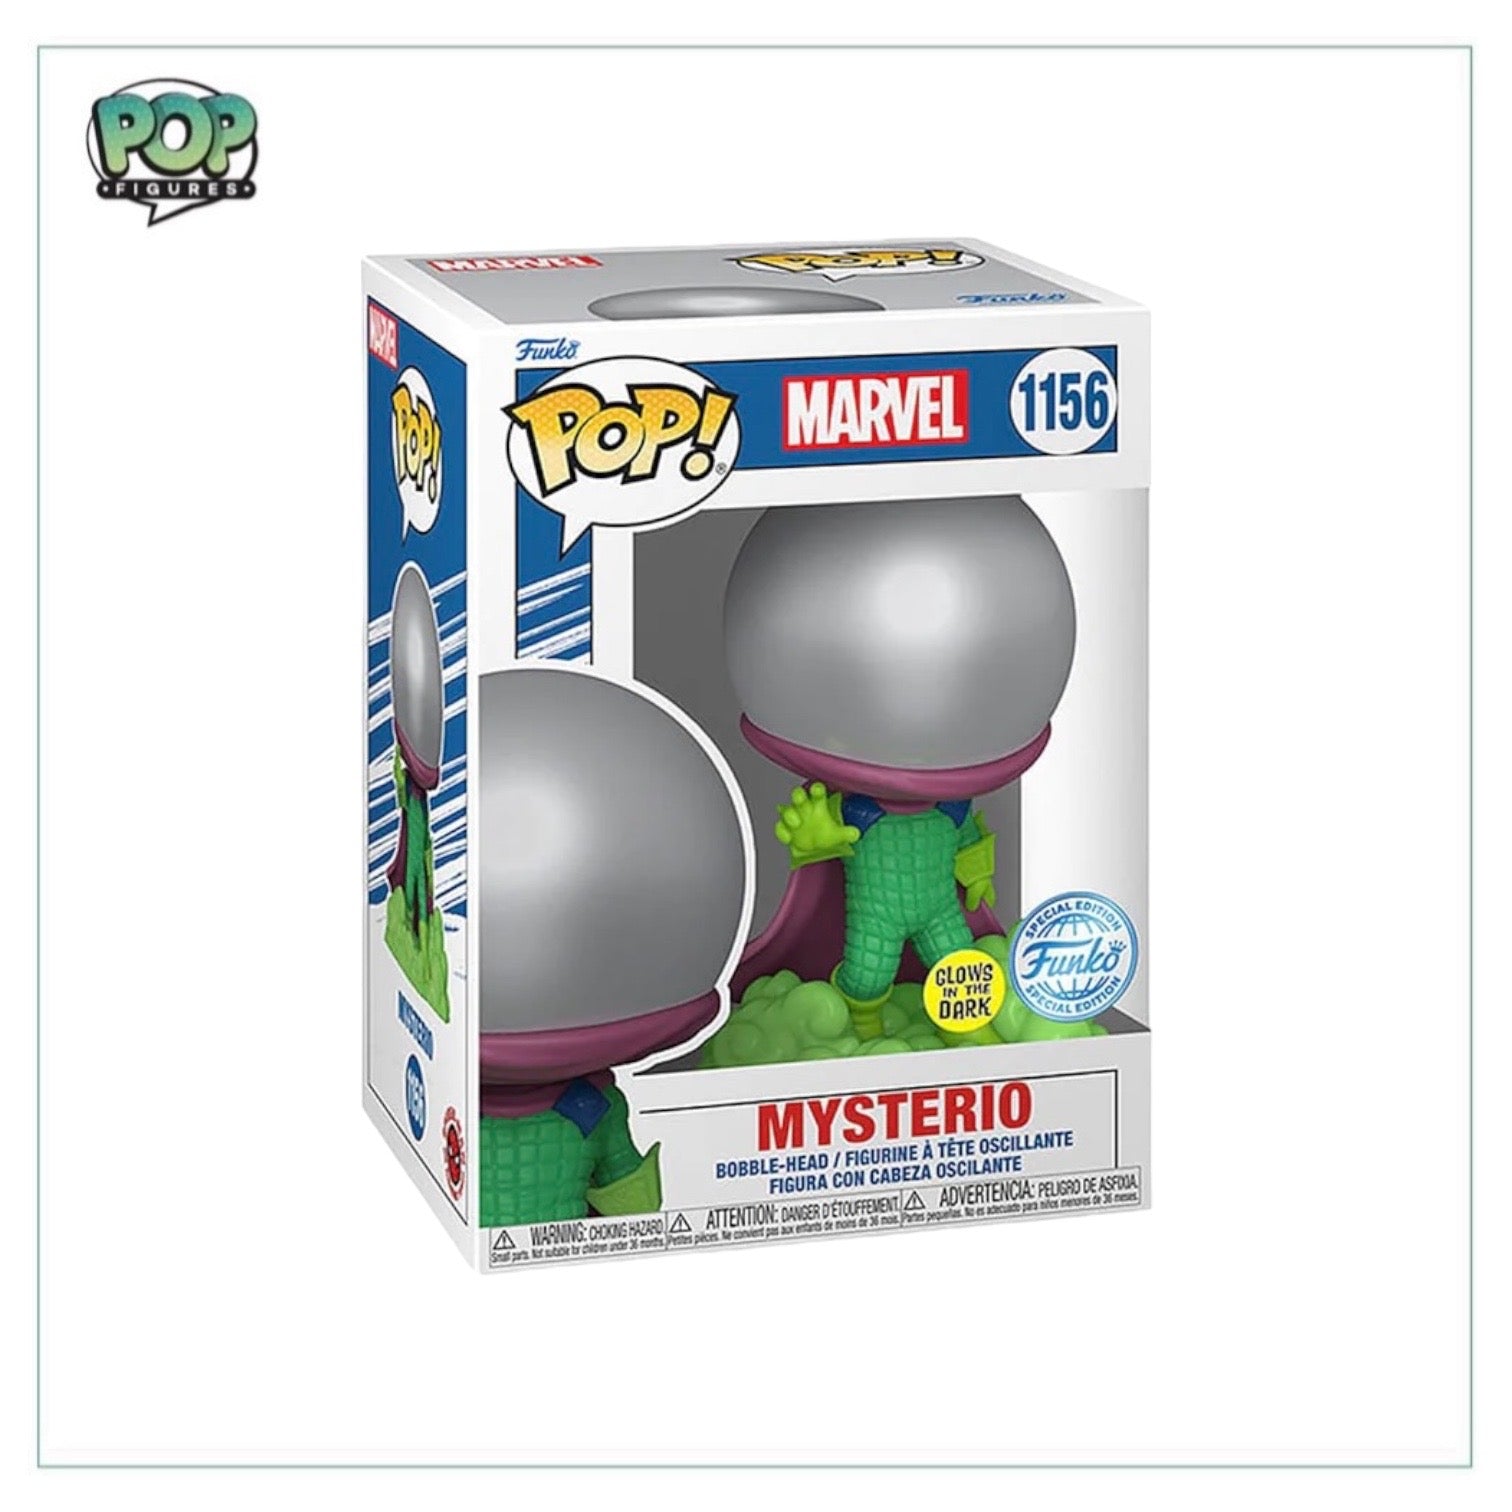 Mysterio #1156 (Glows in the Dark) Funko Pop! - Marvel - Special Edition